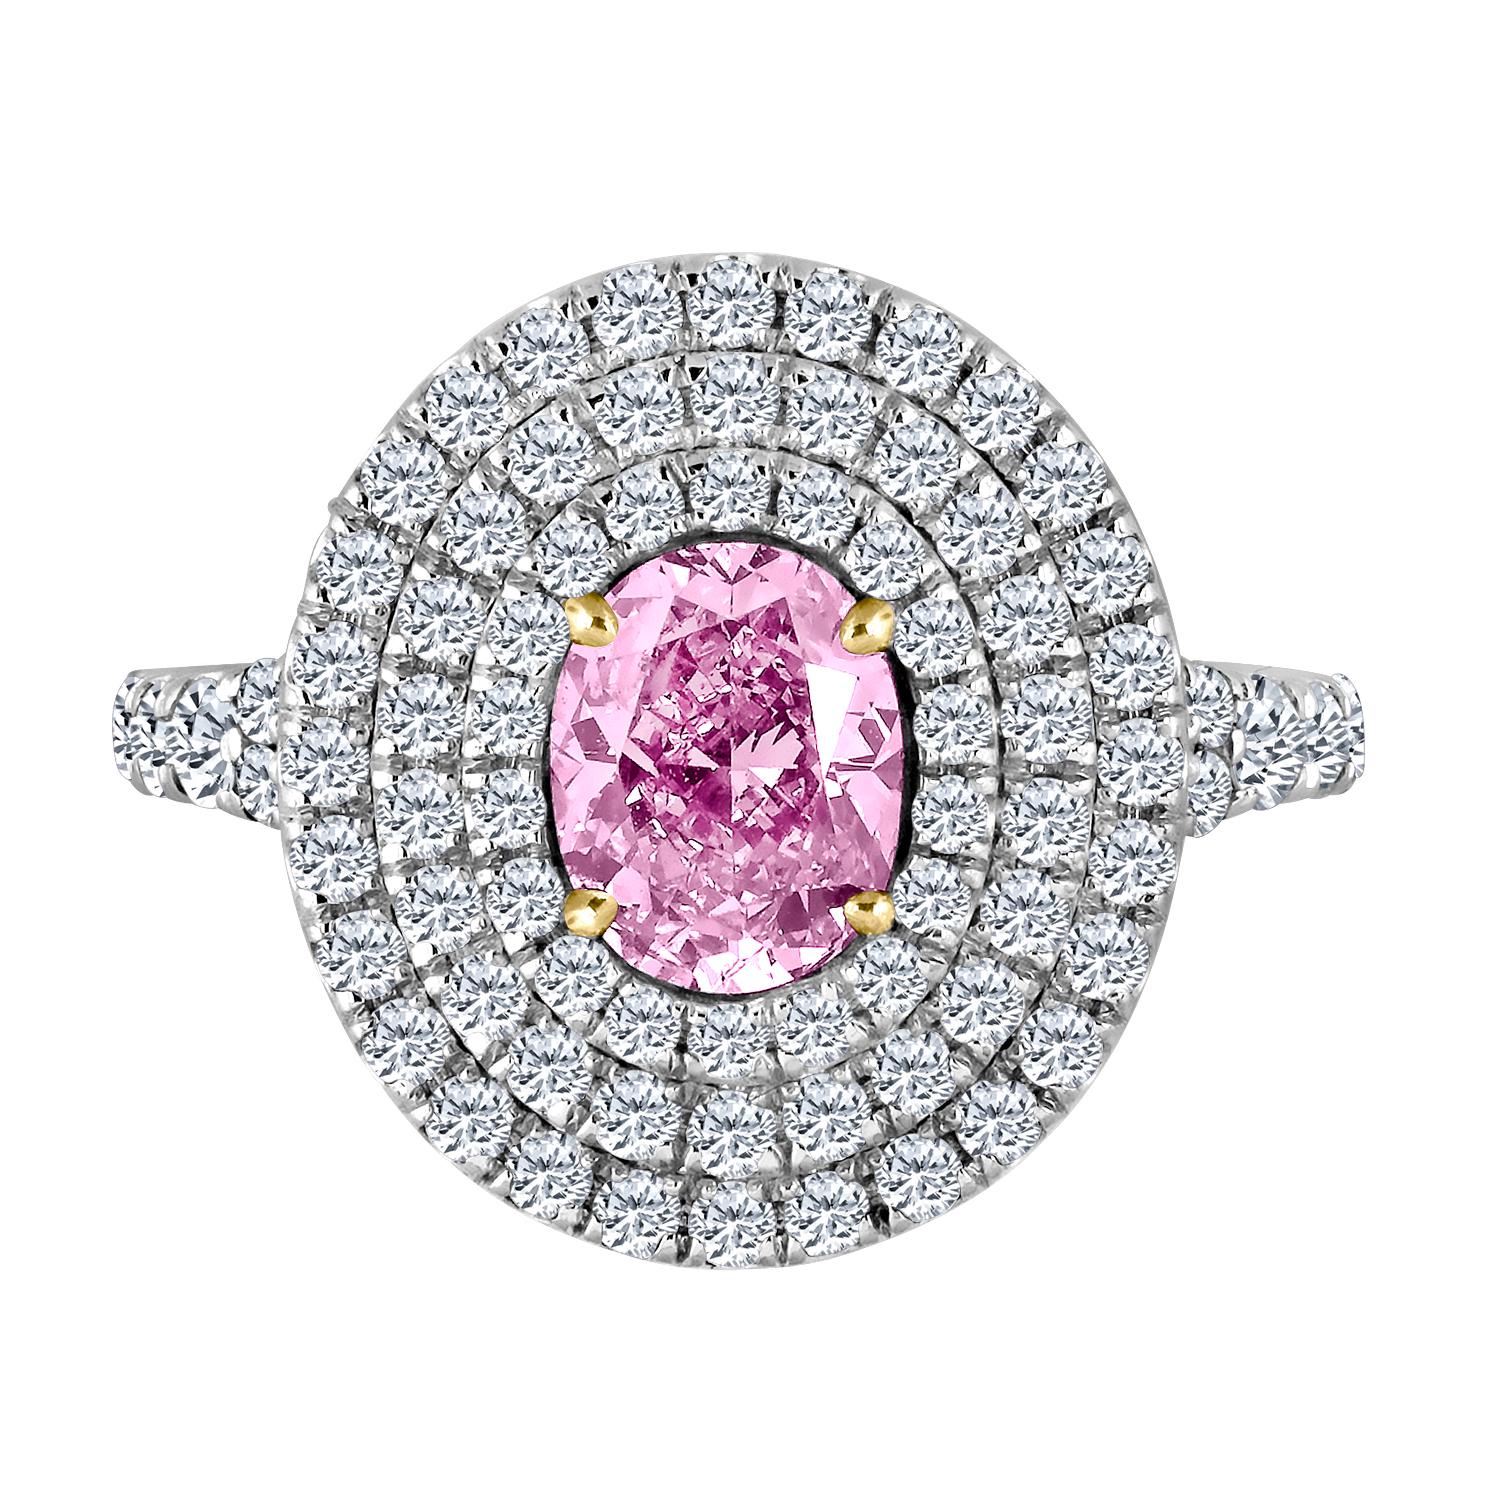 Emilio Jewelry 2.50 Carat GIA Certified Fancy Pink Diamond Ring